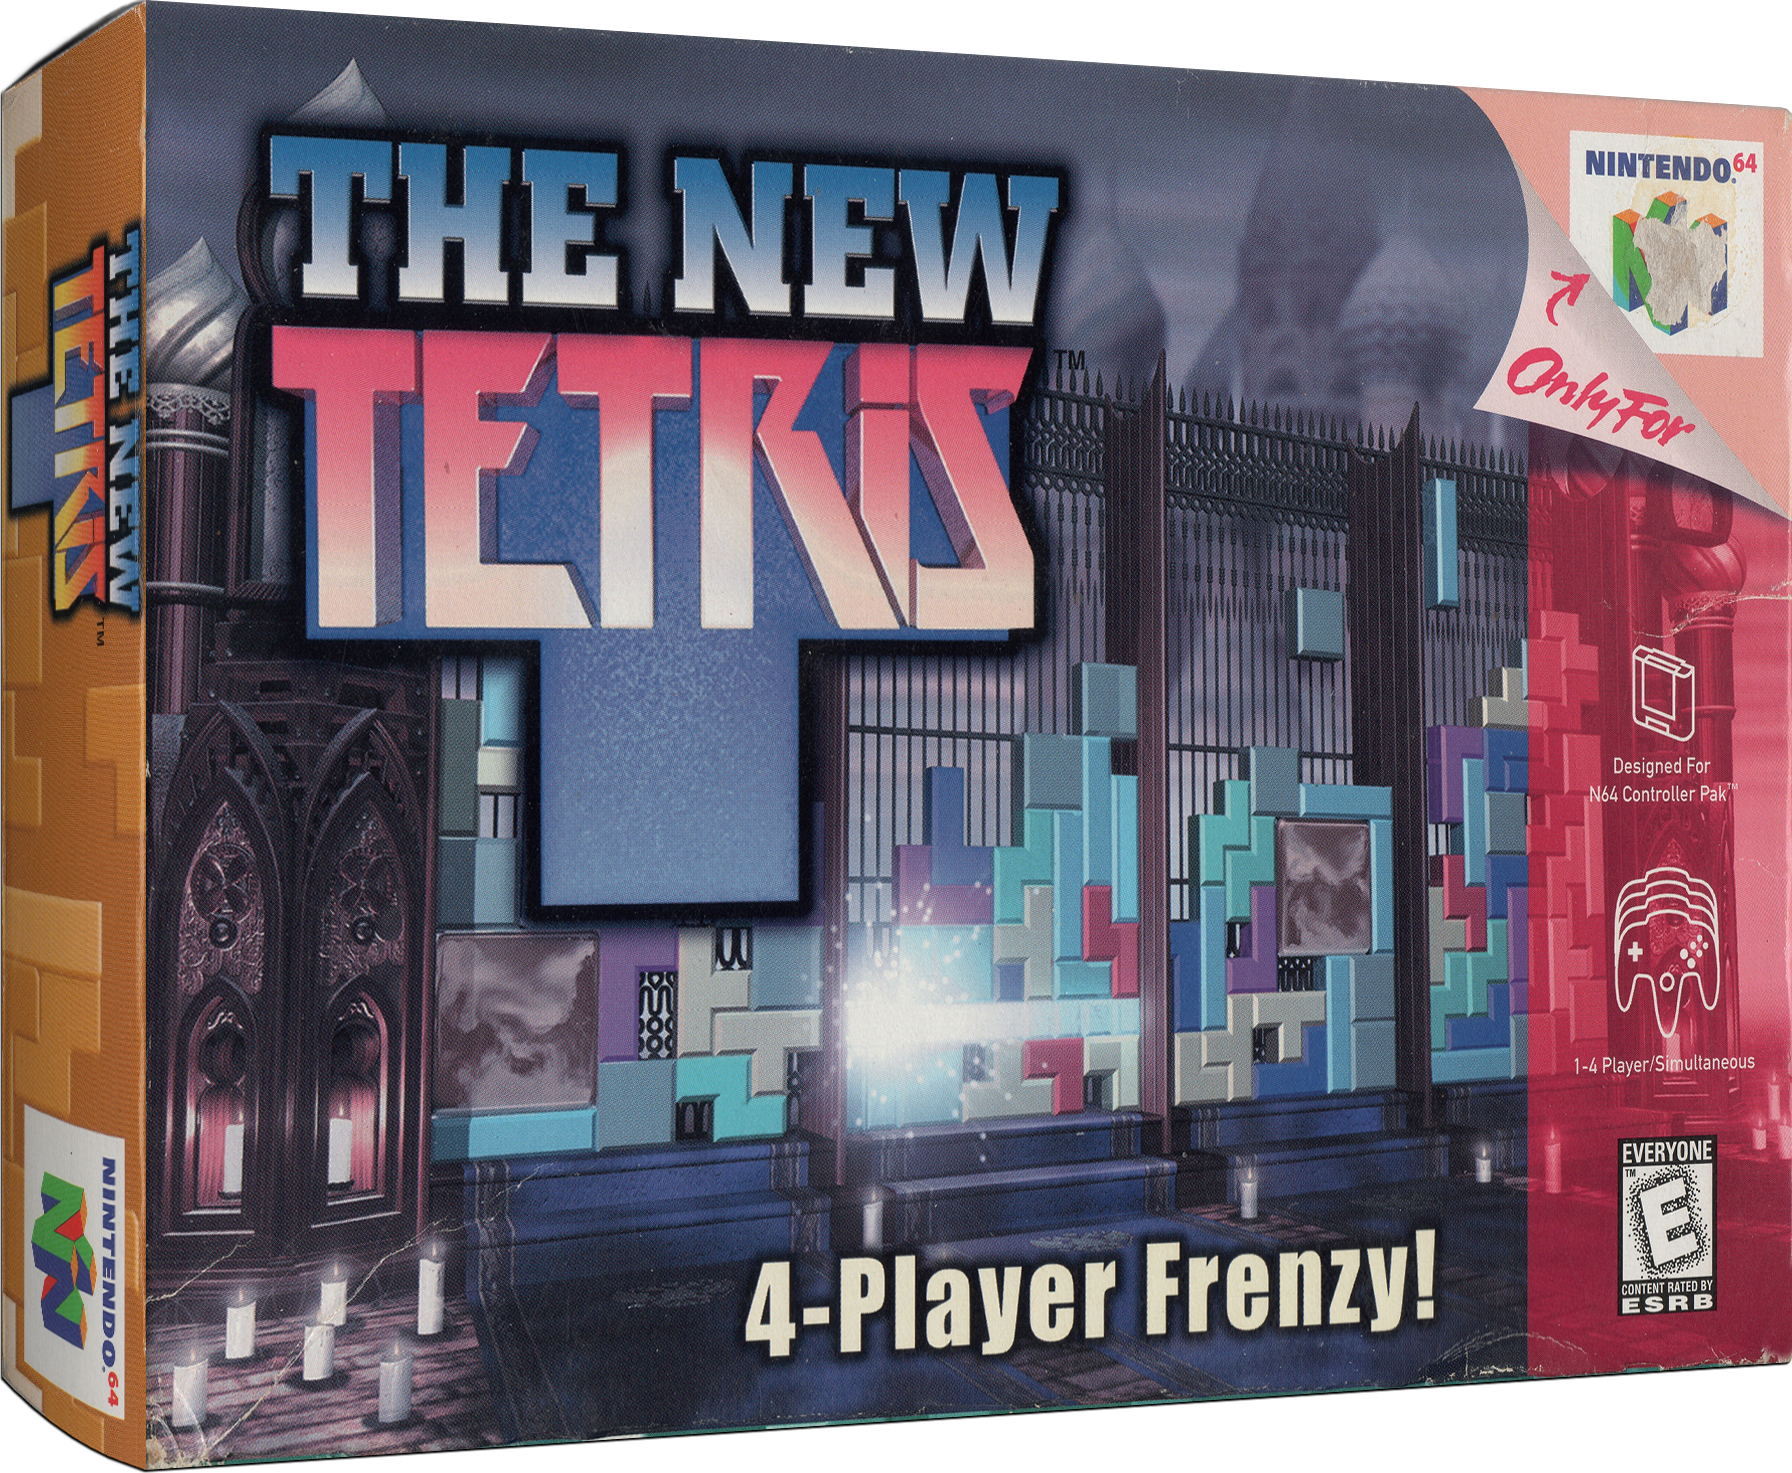 The New Tetris Images - LaunchBox Games Database